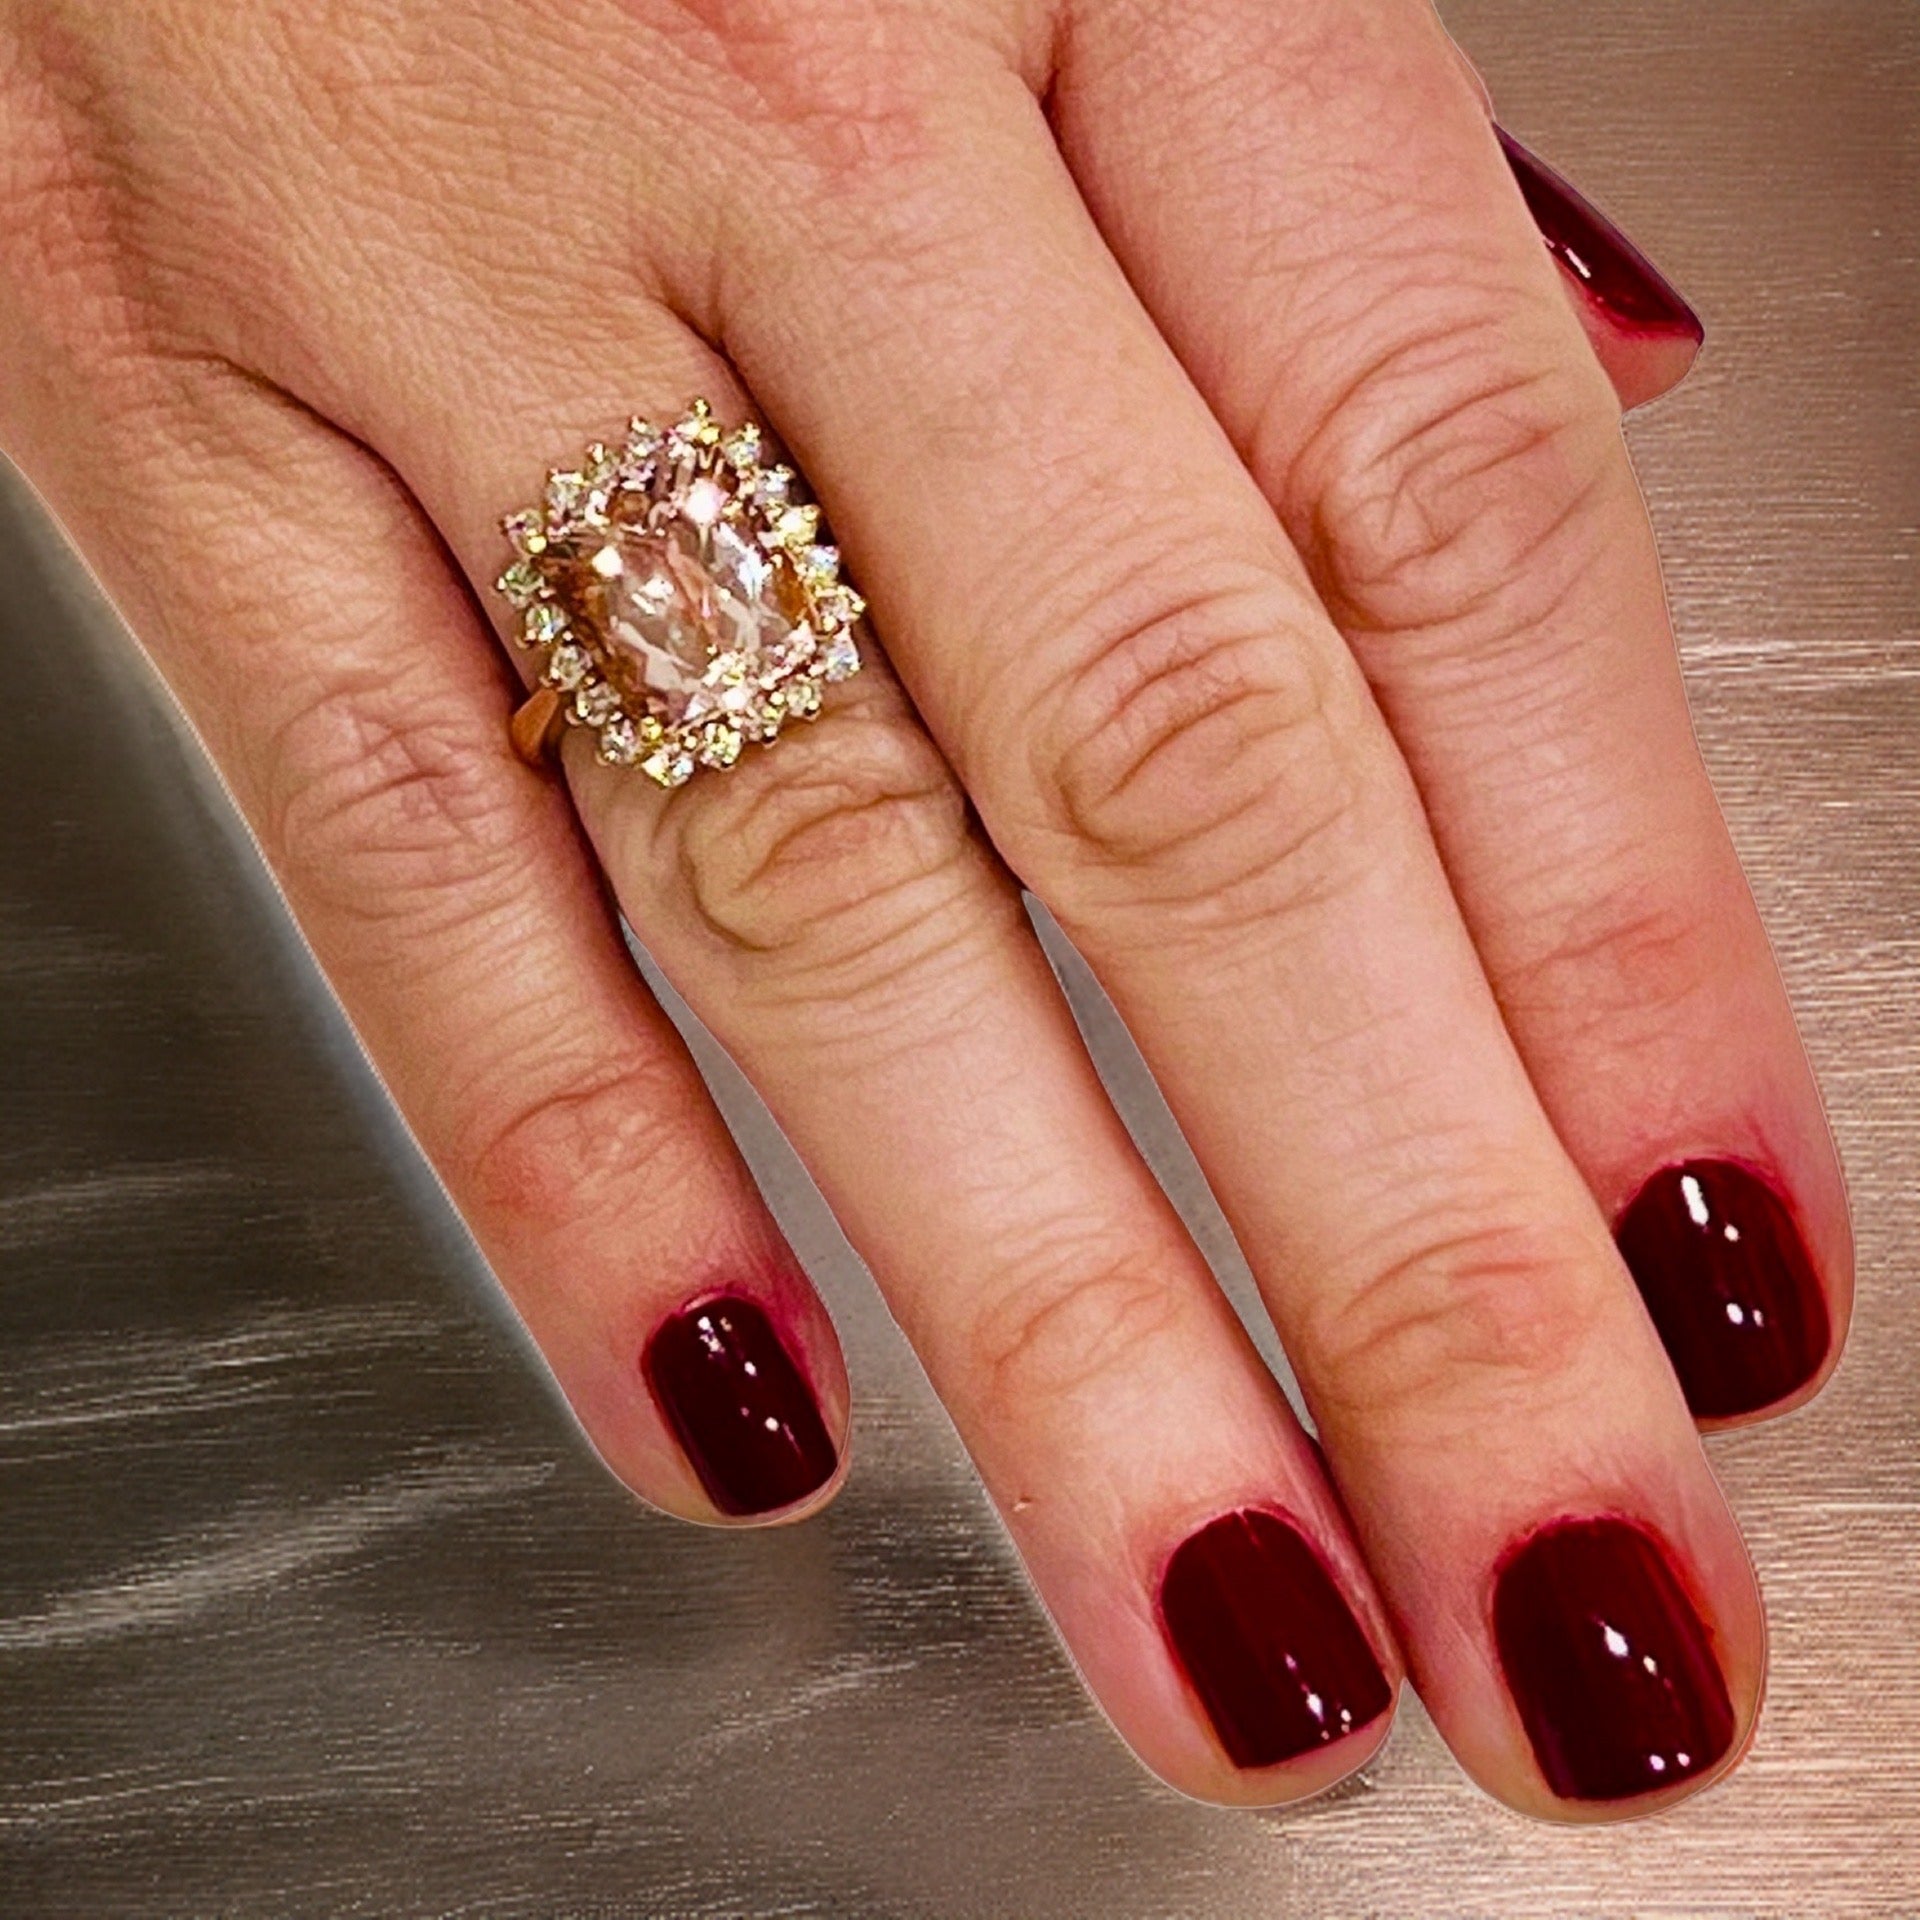 Tourmaline Rubellite Diamond Ring 14 kt 7.45 tcw Certified $5,950 013308 - Certified Fine Jewelry